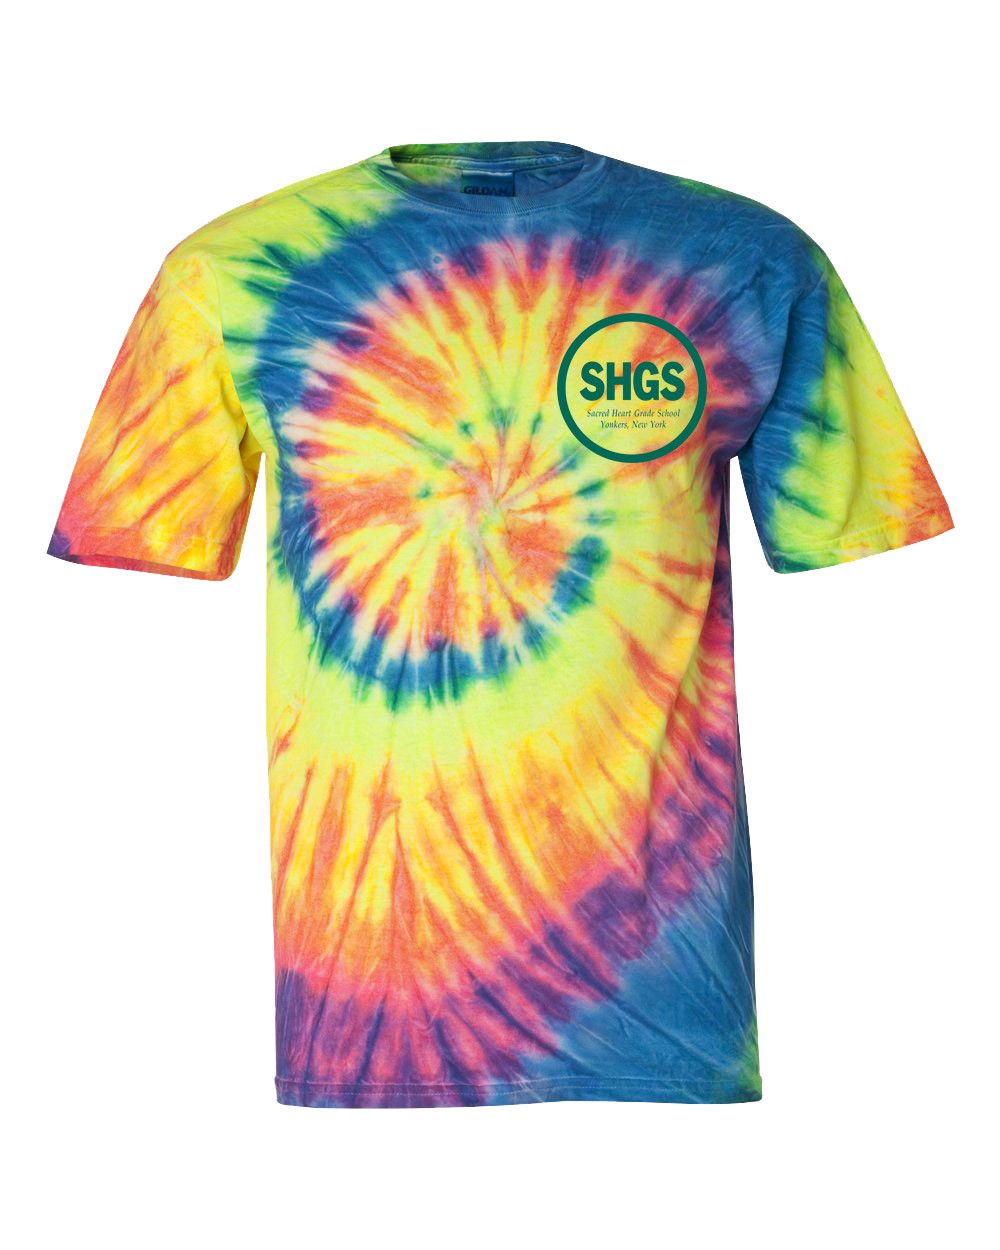 SHGS S/S Tie Dye Spirit T-Shirt w/ Kelly Green Logo - Please Allow